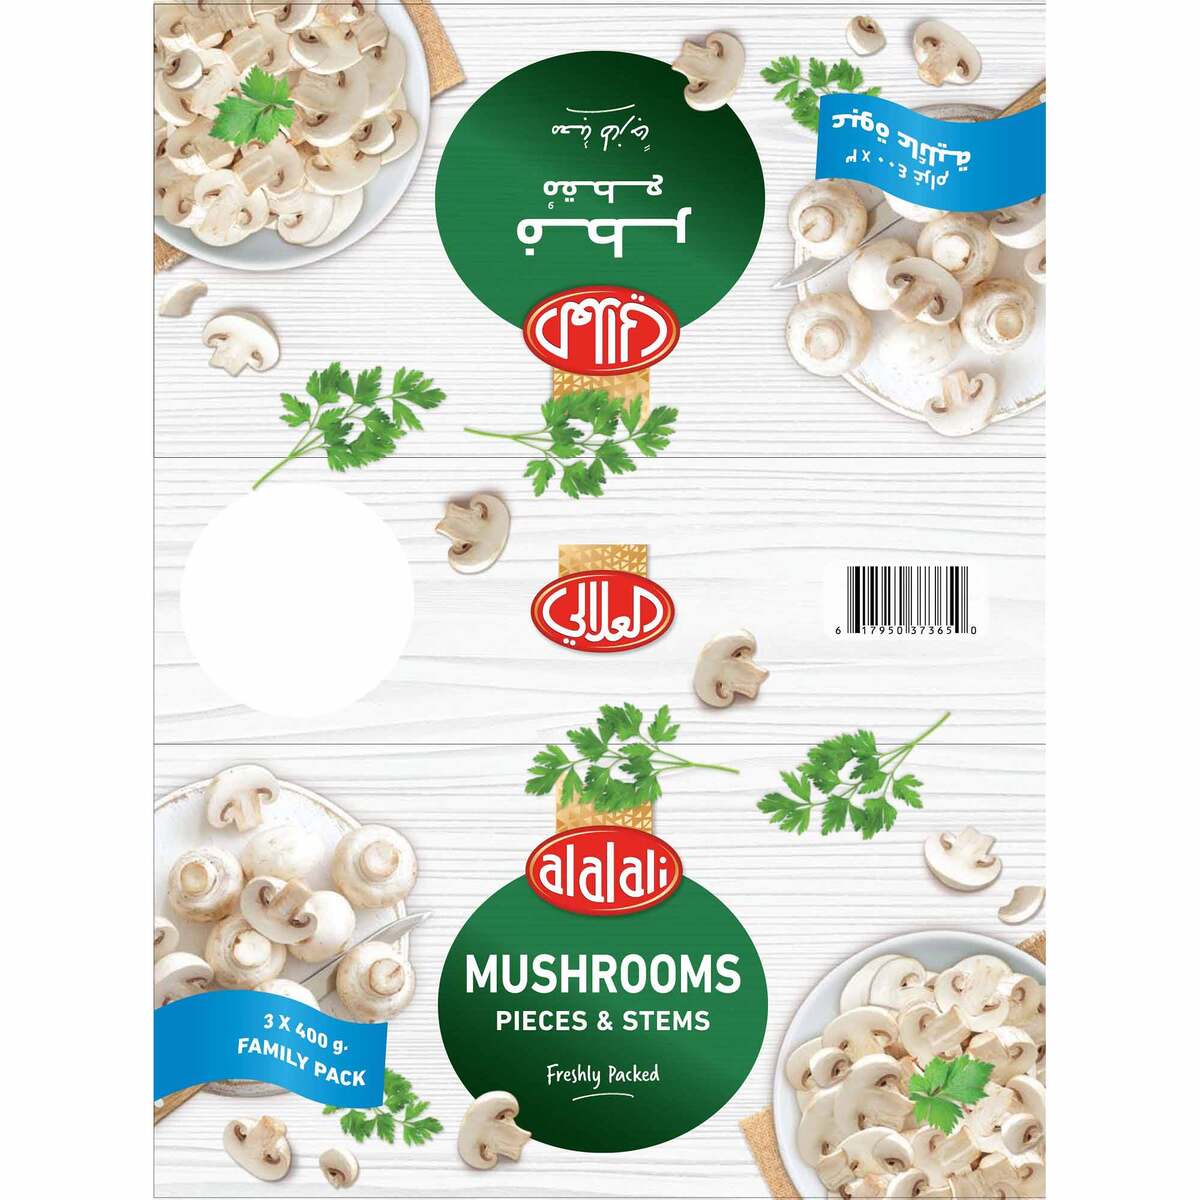 Al Alali Mushroom Pieces & Stems Value Pack 3 x 400 g